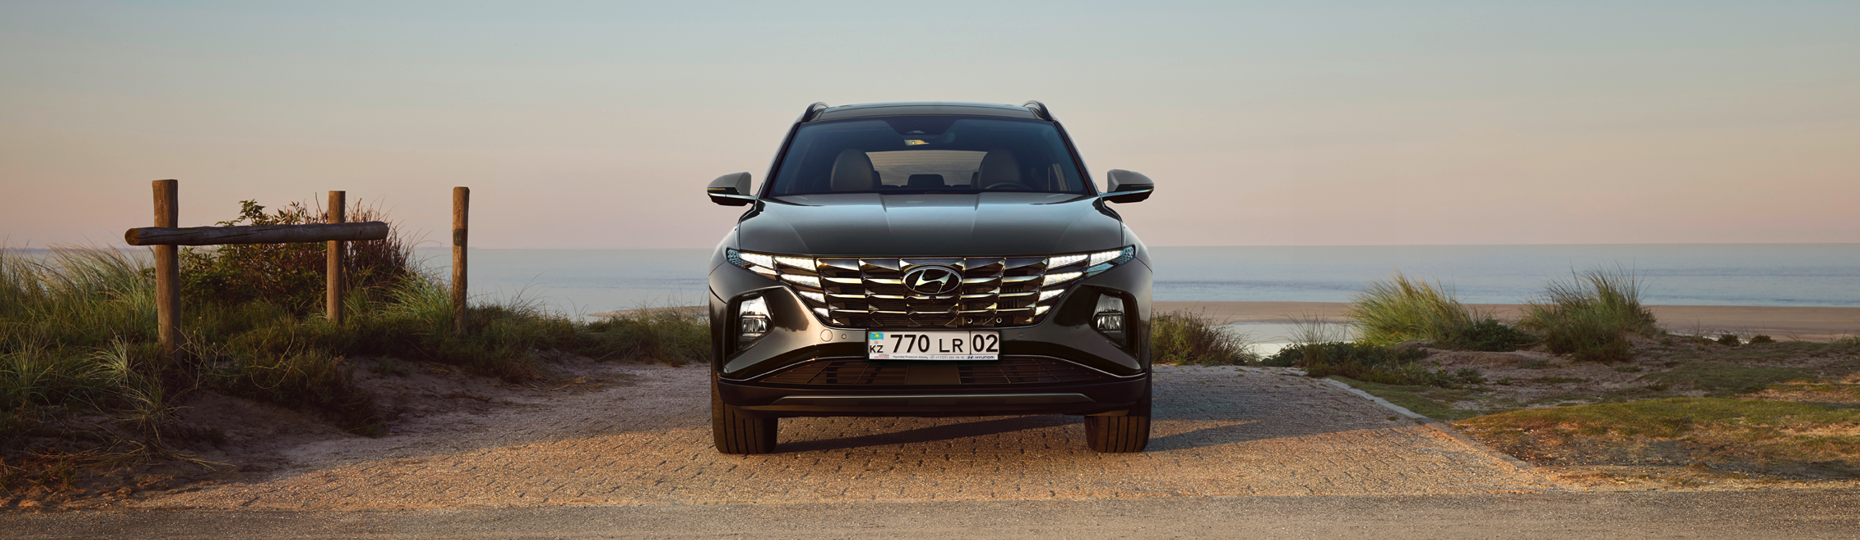 Цена Hyundai Tucson в Казахстане – стоимость Хендэ Туксон